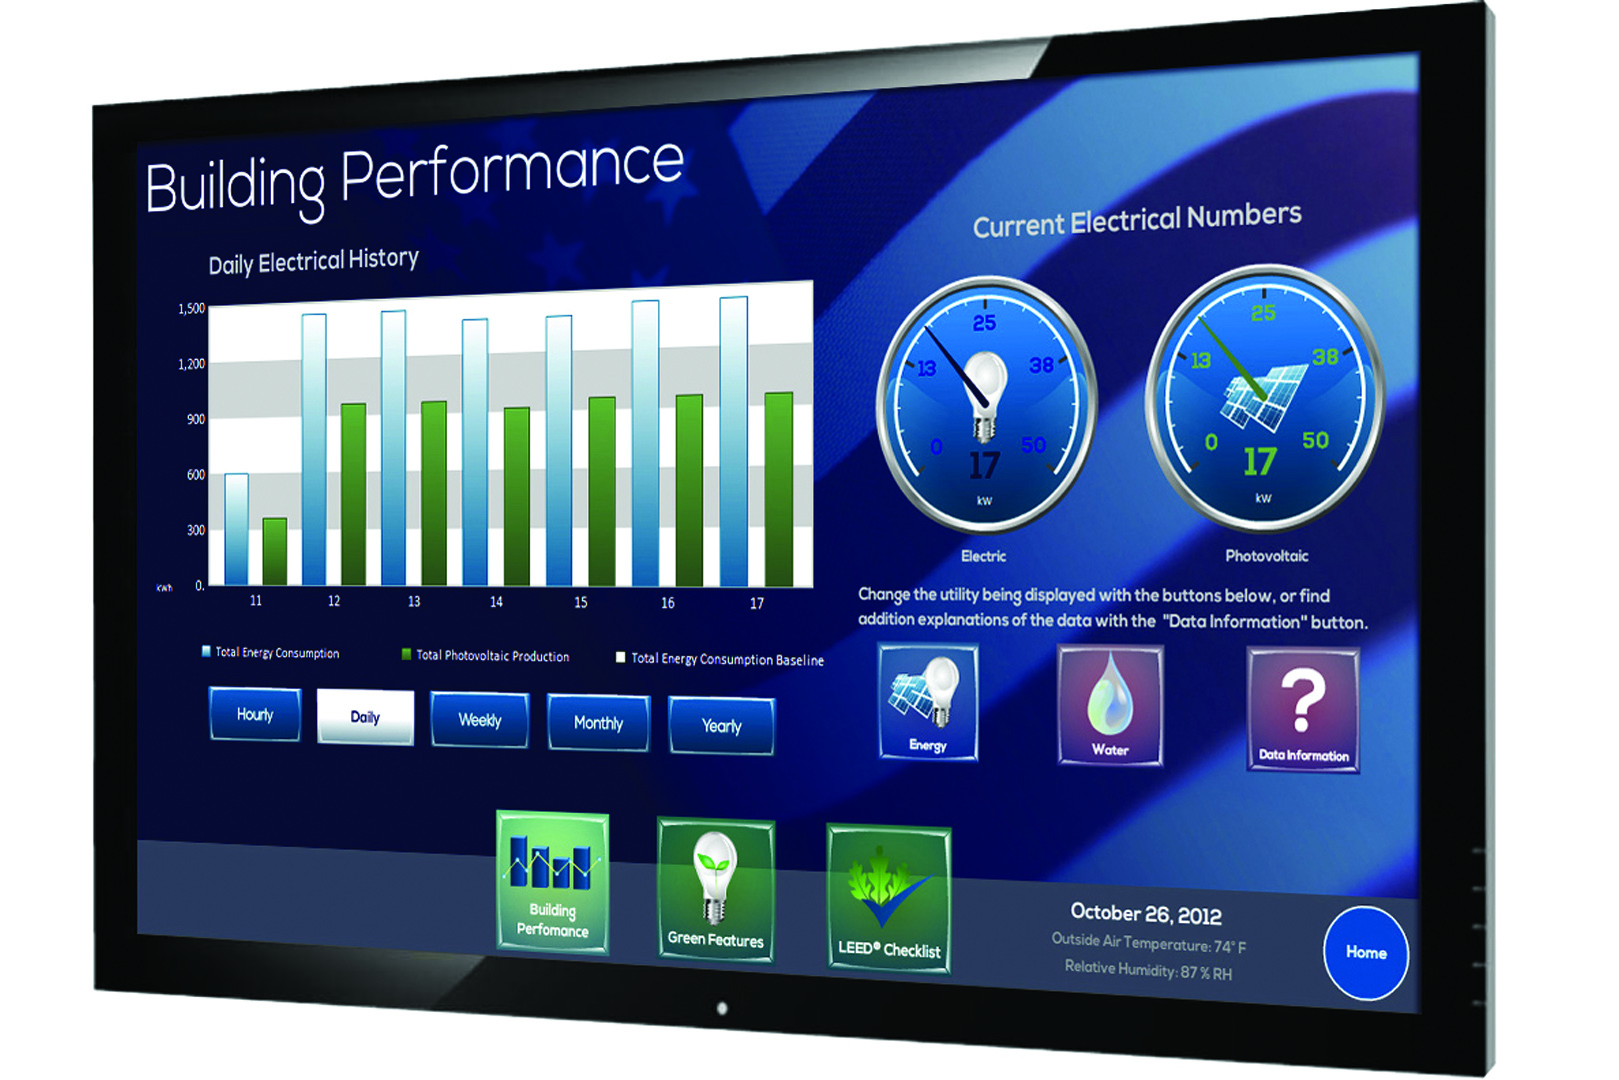 Интерфейс Energy. Sony Performance сборка. Energy dashboard. Interface Performance materials CMP-4000 купить. Building performance